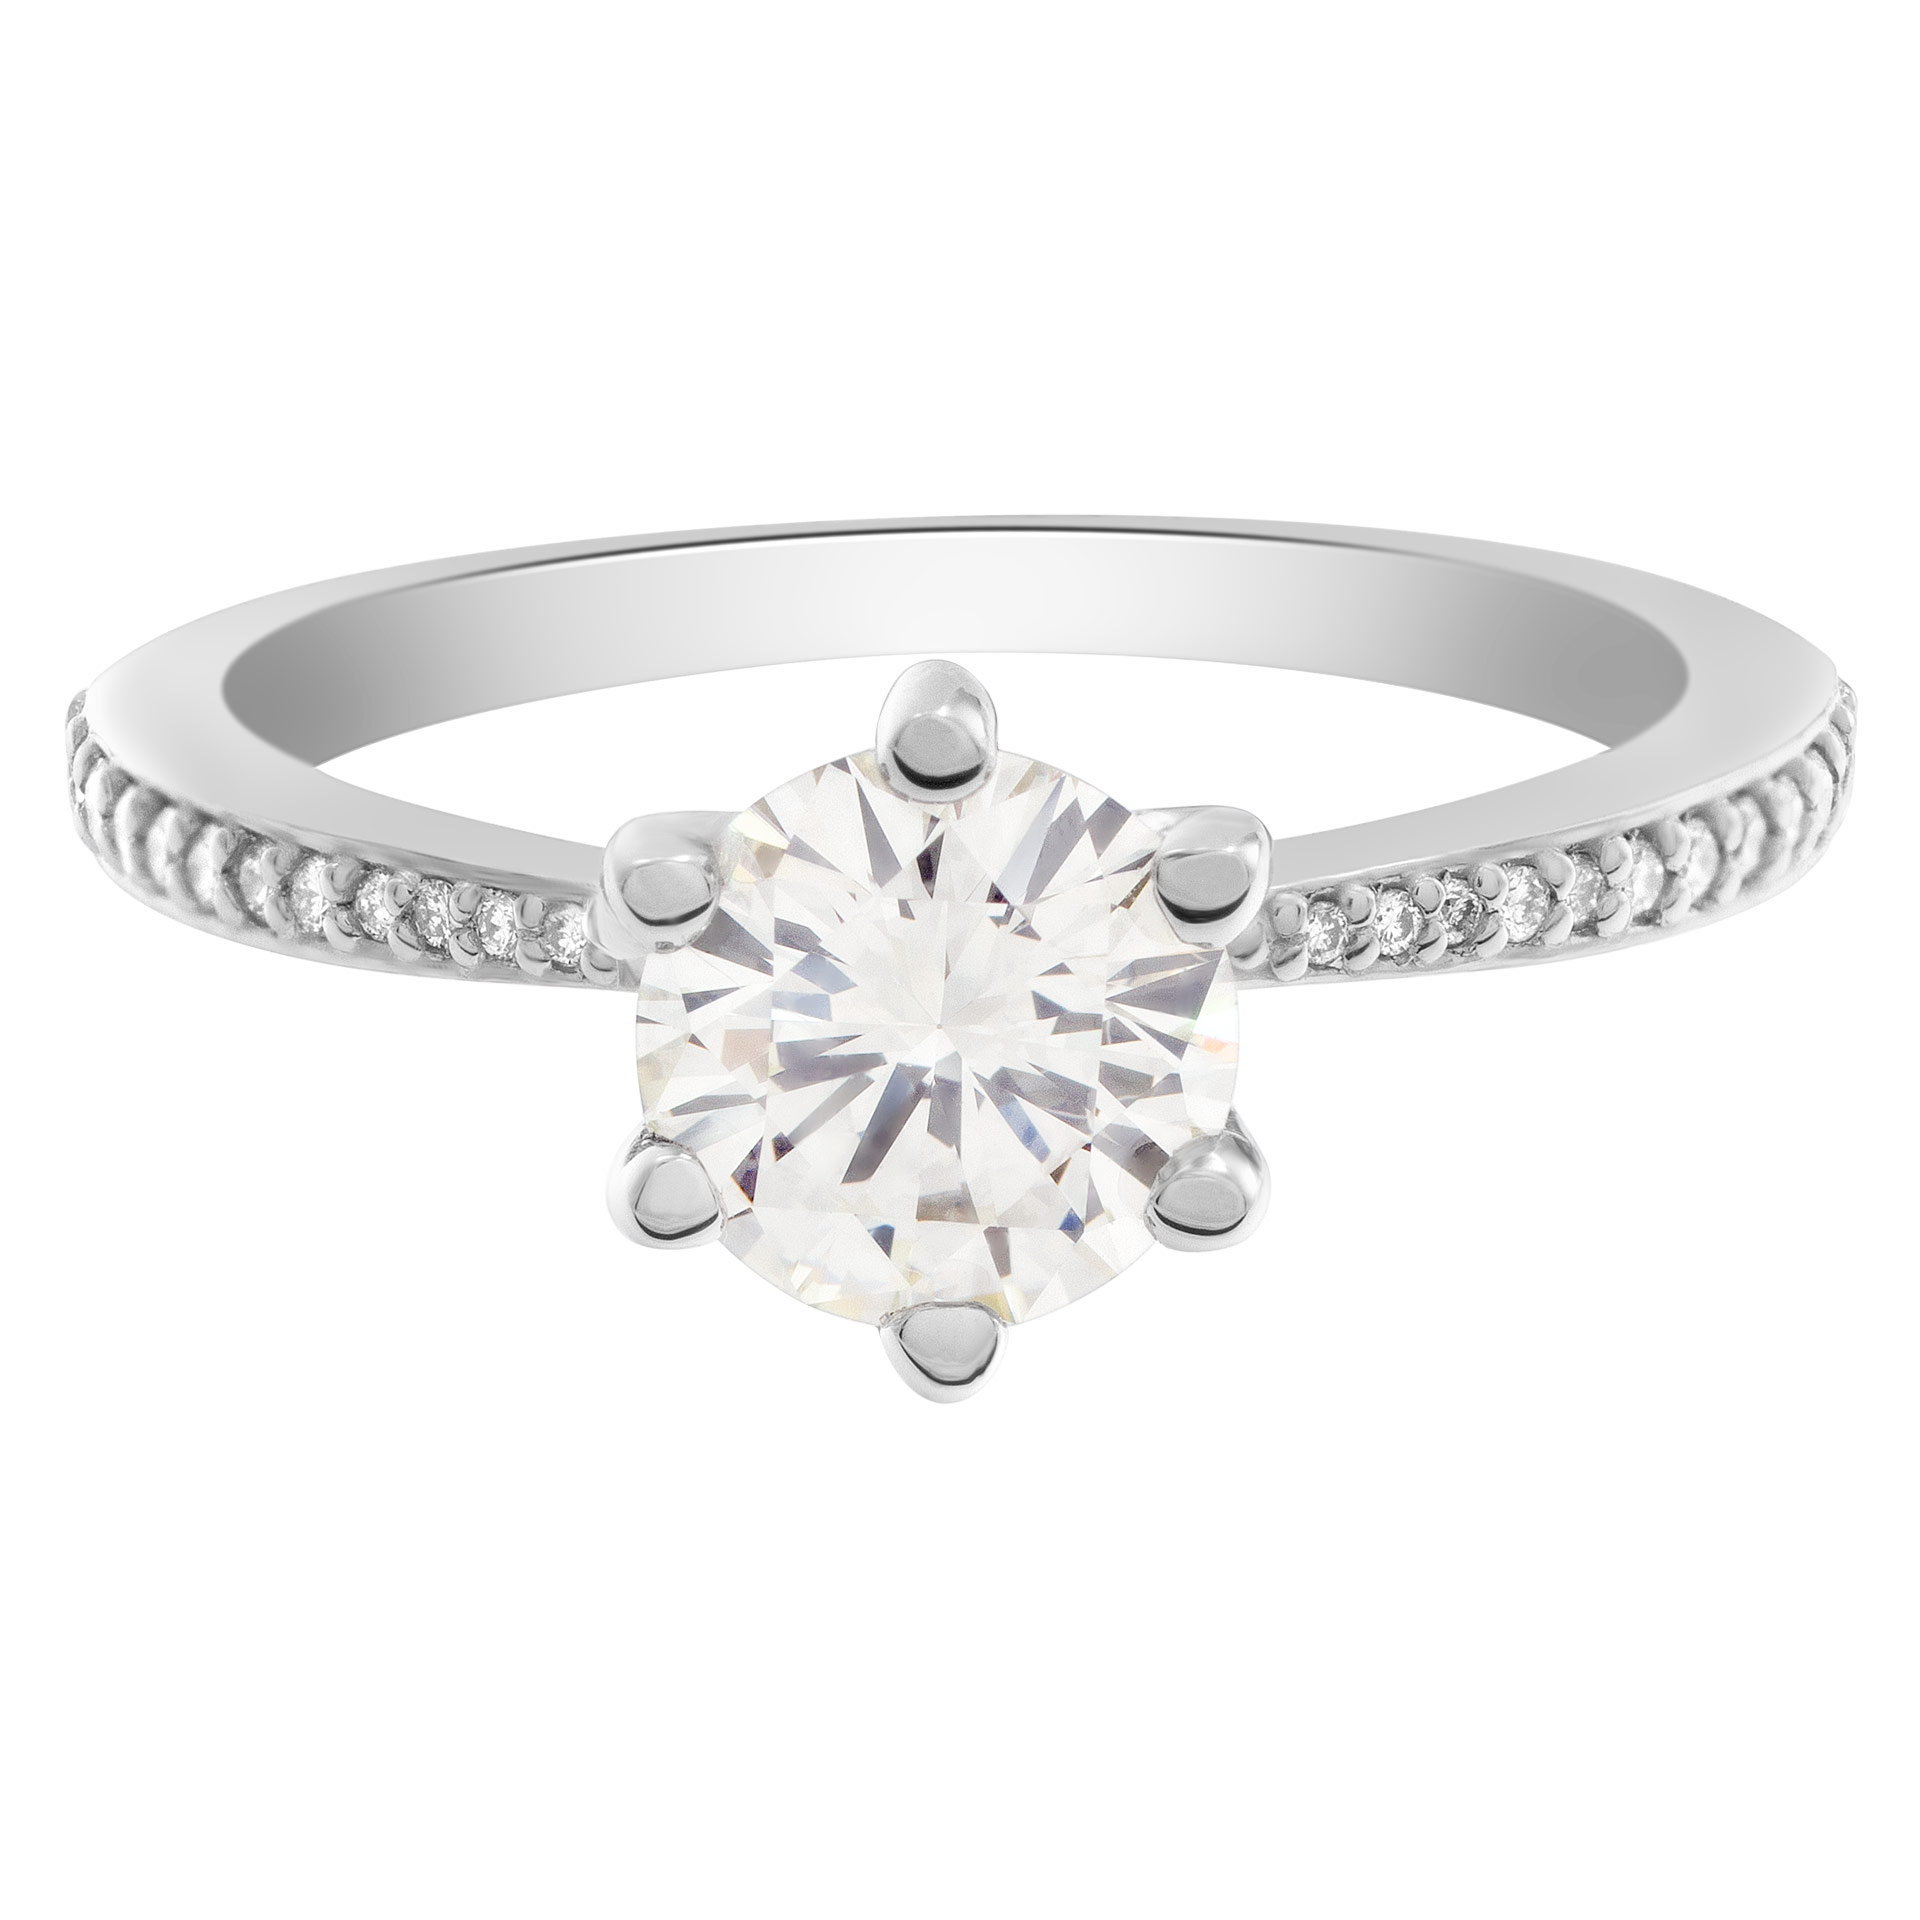 GIA certified round brilliant cut diamond  1.12 carat ring (M color, VS1 clarity)